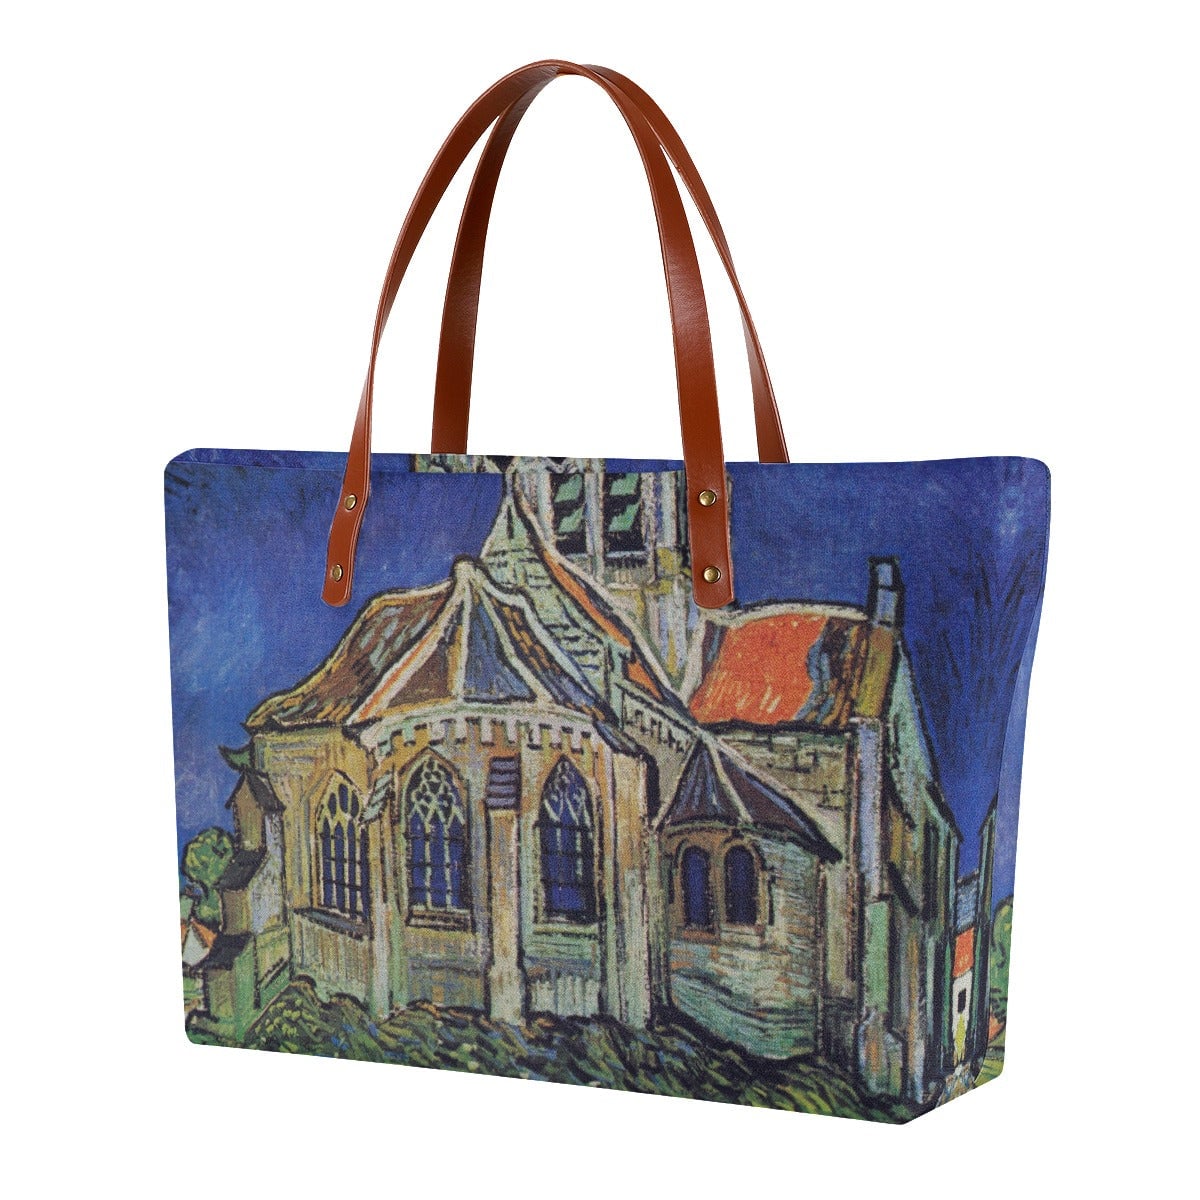 Vincent van Gogh’s The Church at Auvers Tote Bag